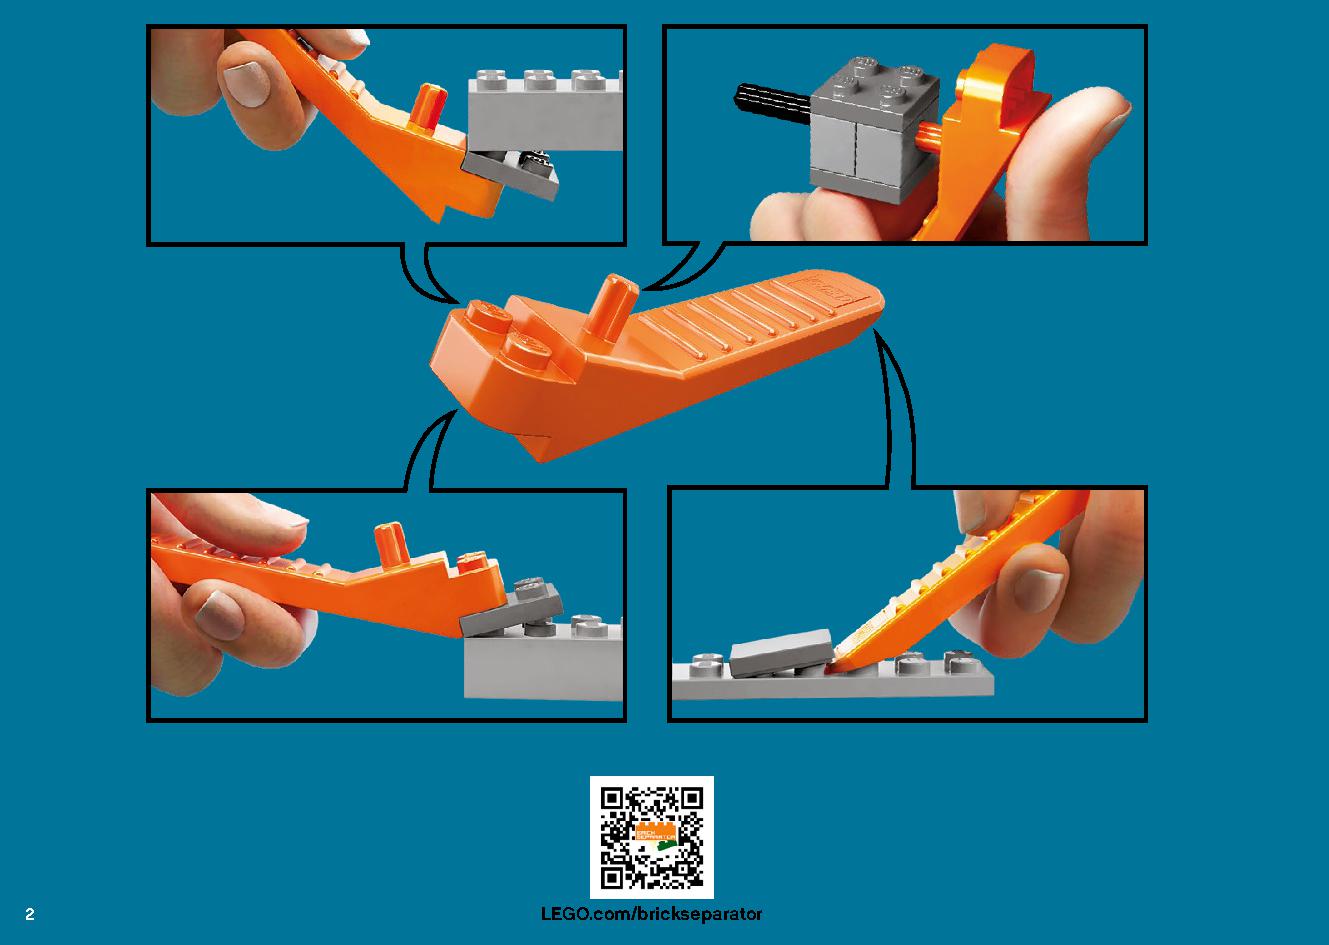 International Space Station 21321 レゴの商品情報 レゴの説明書・組立方法 2 page